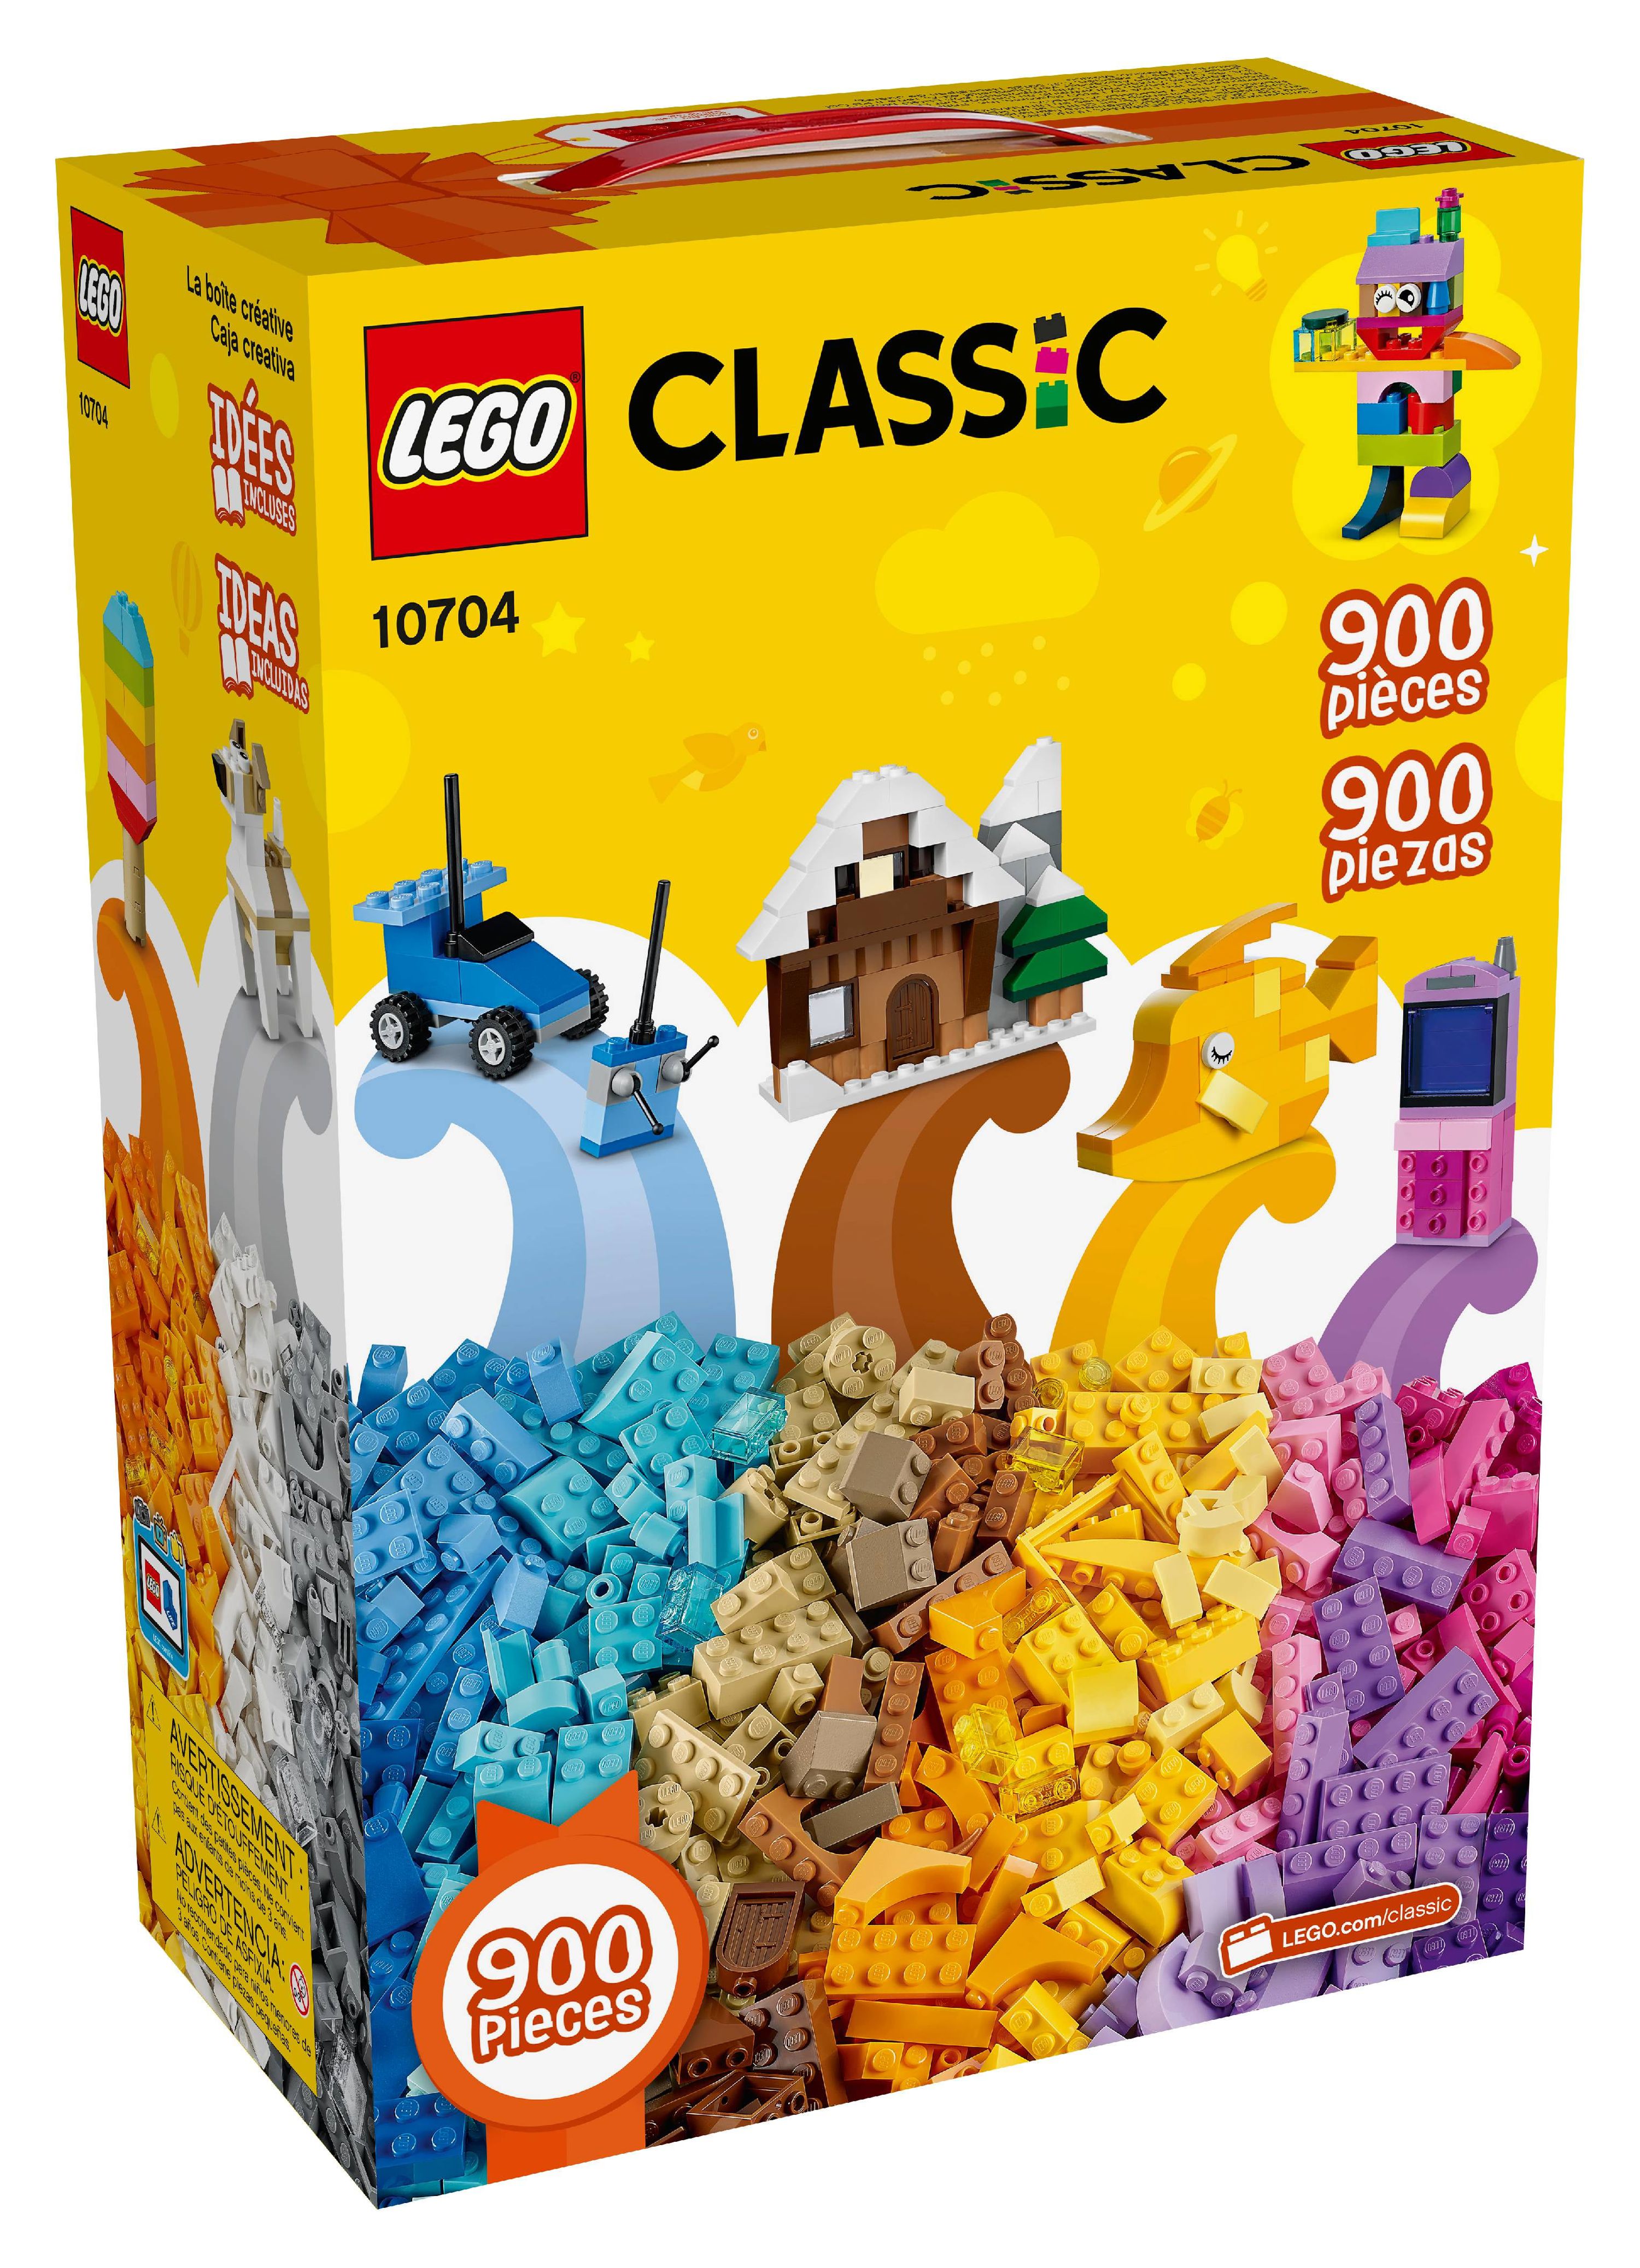 LEGO Classic Creative Box 10704 Building Set (900 Pieces) - image 6 of 6